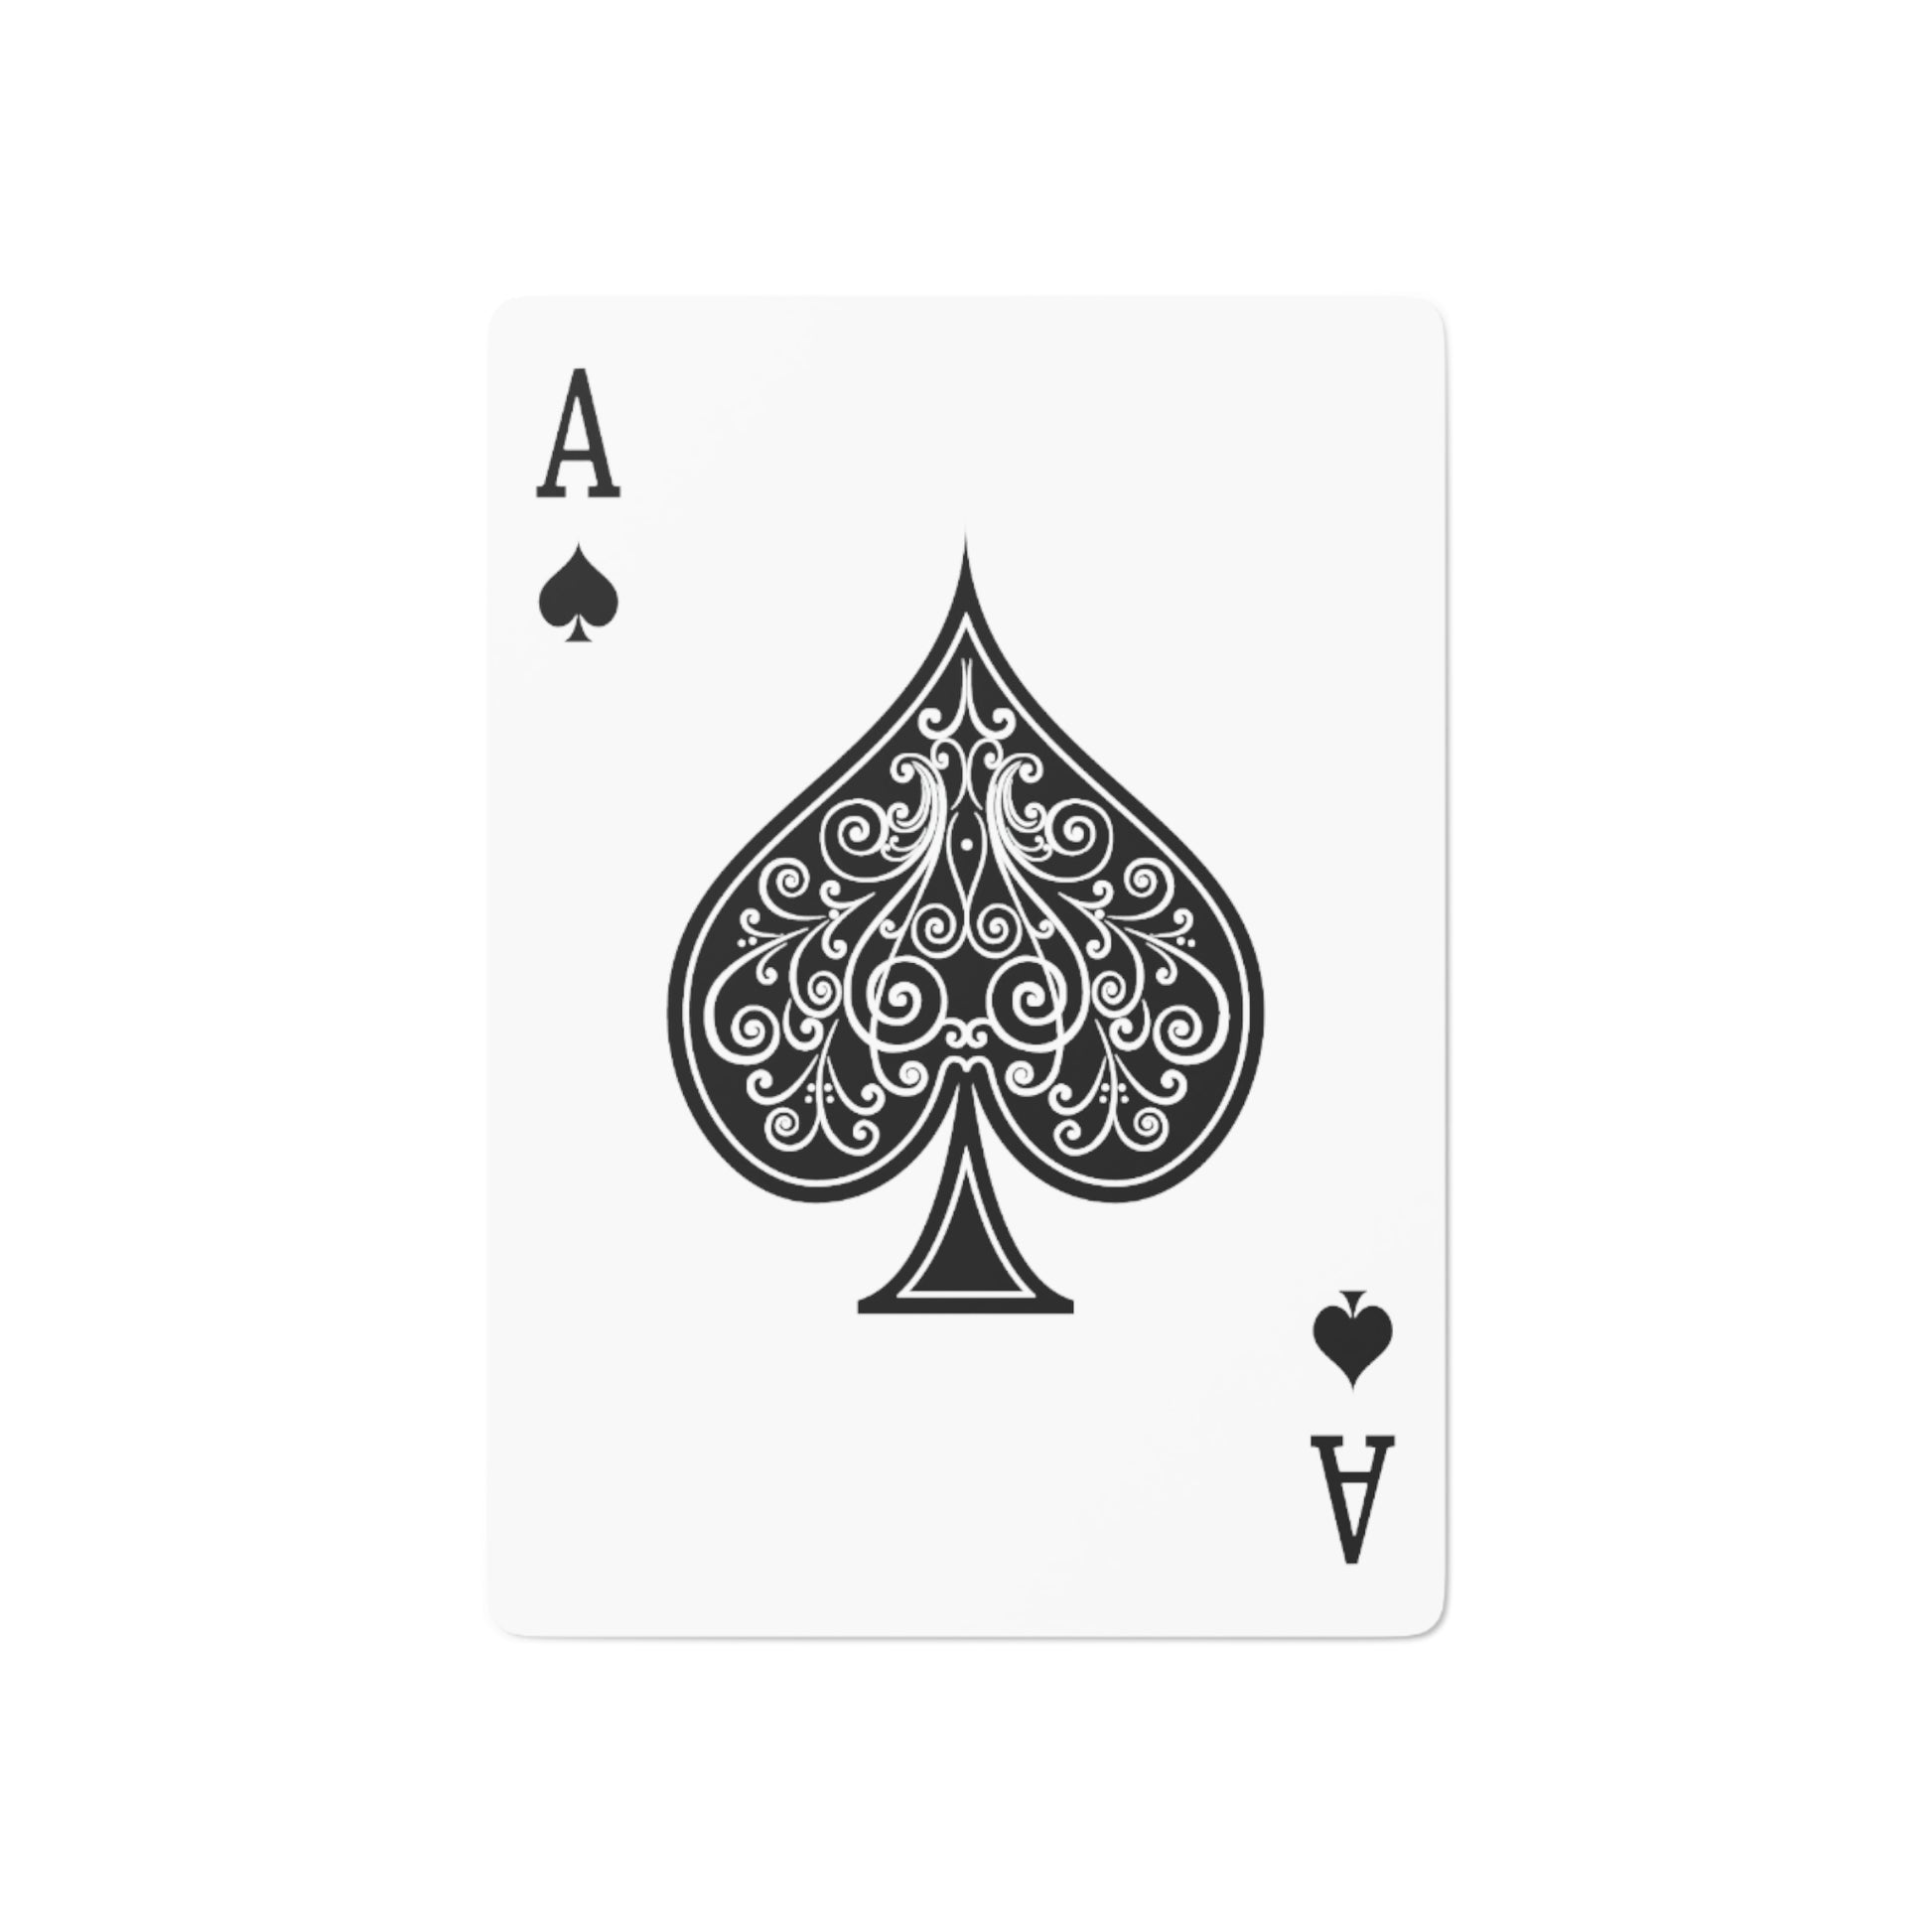 Custom Poker Cards SAMCRO